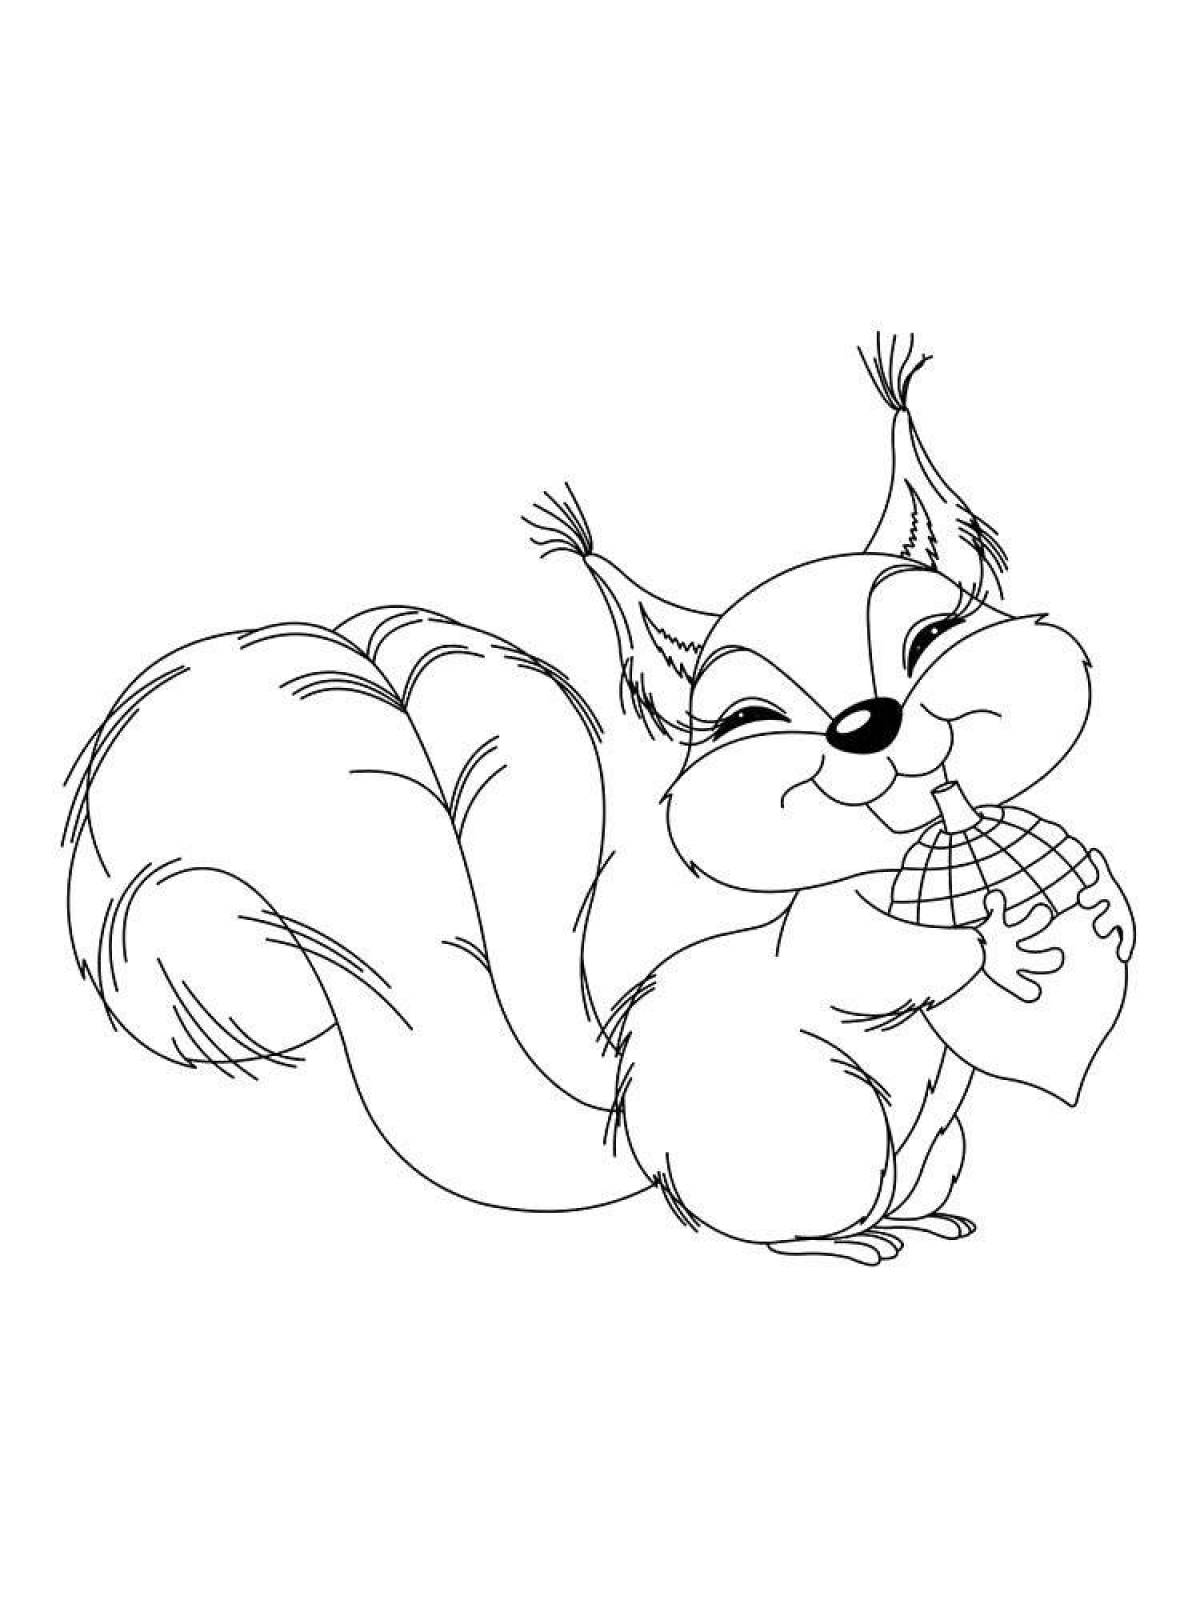 Magic squirrel coloring book for kids